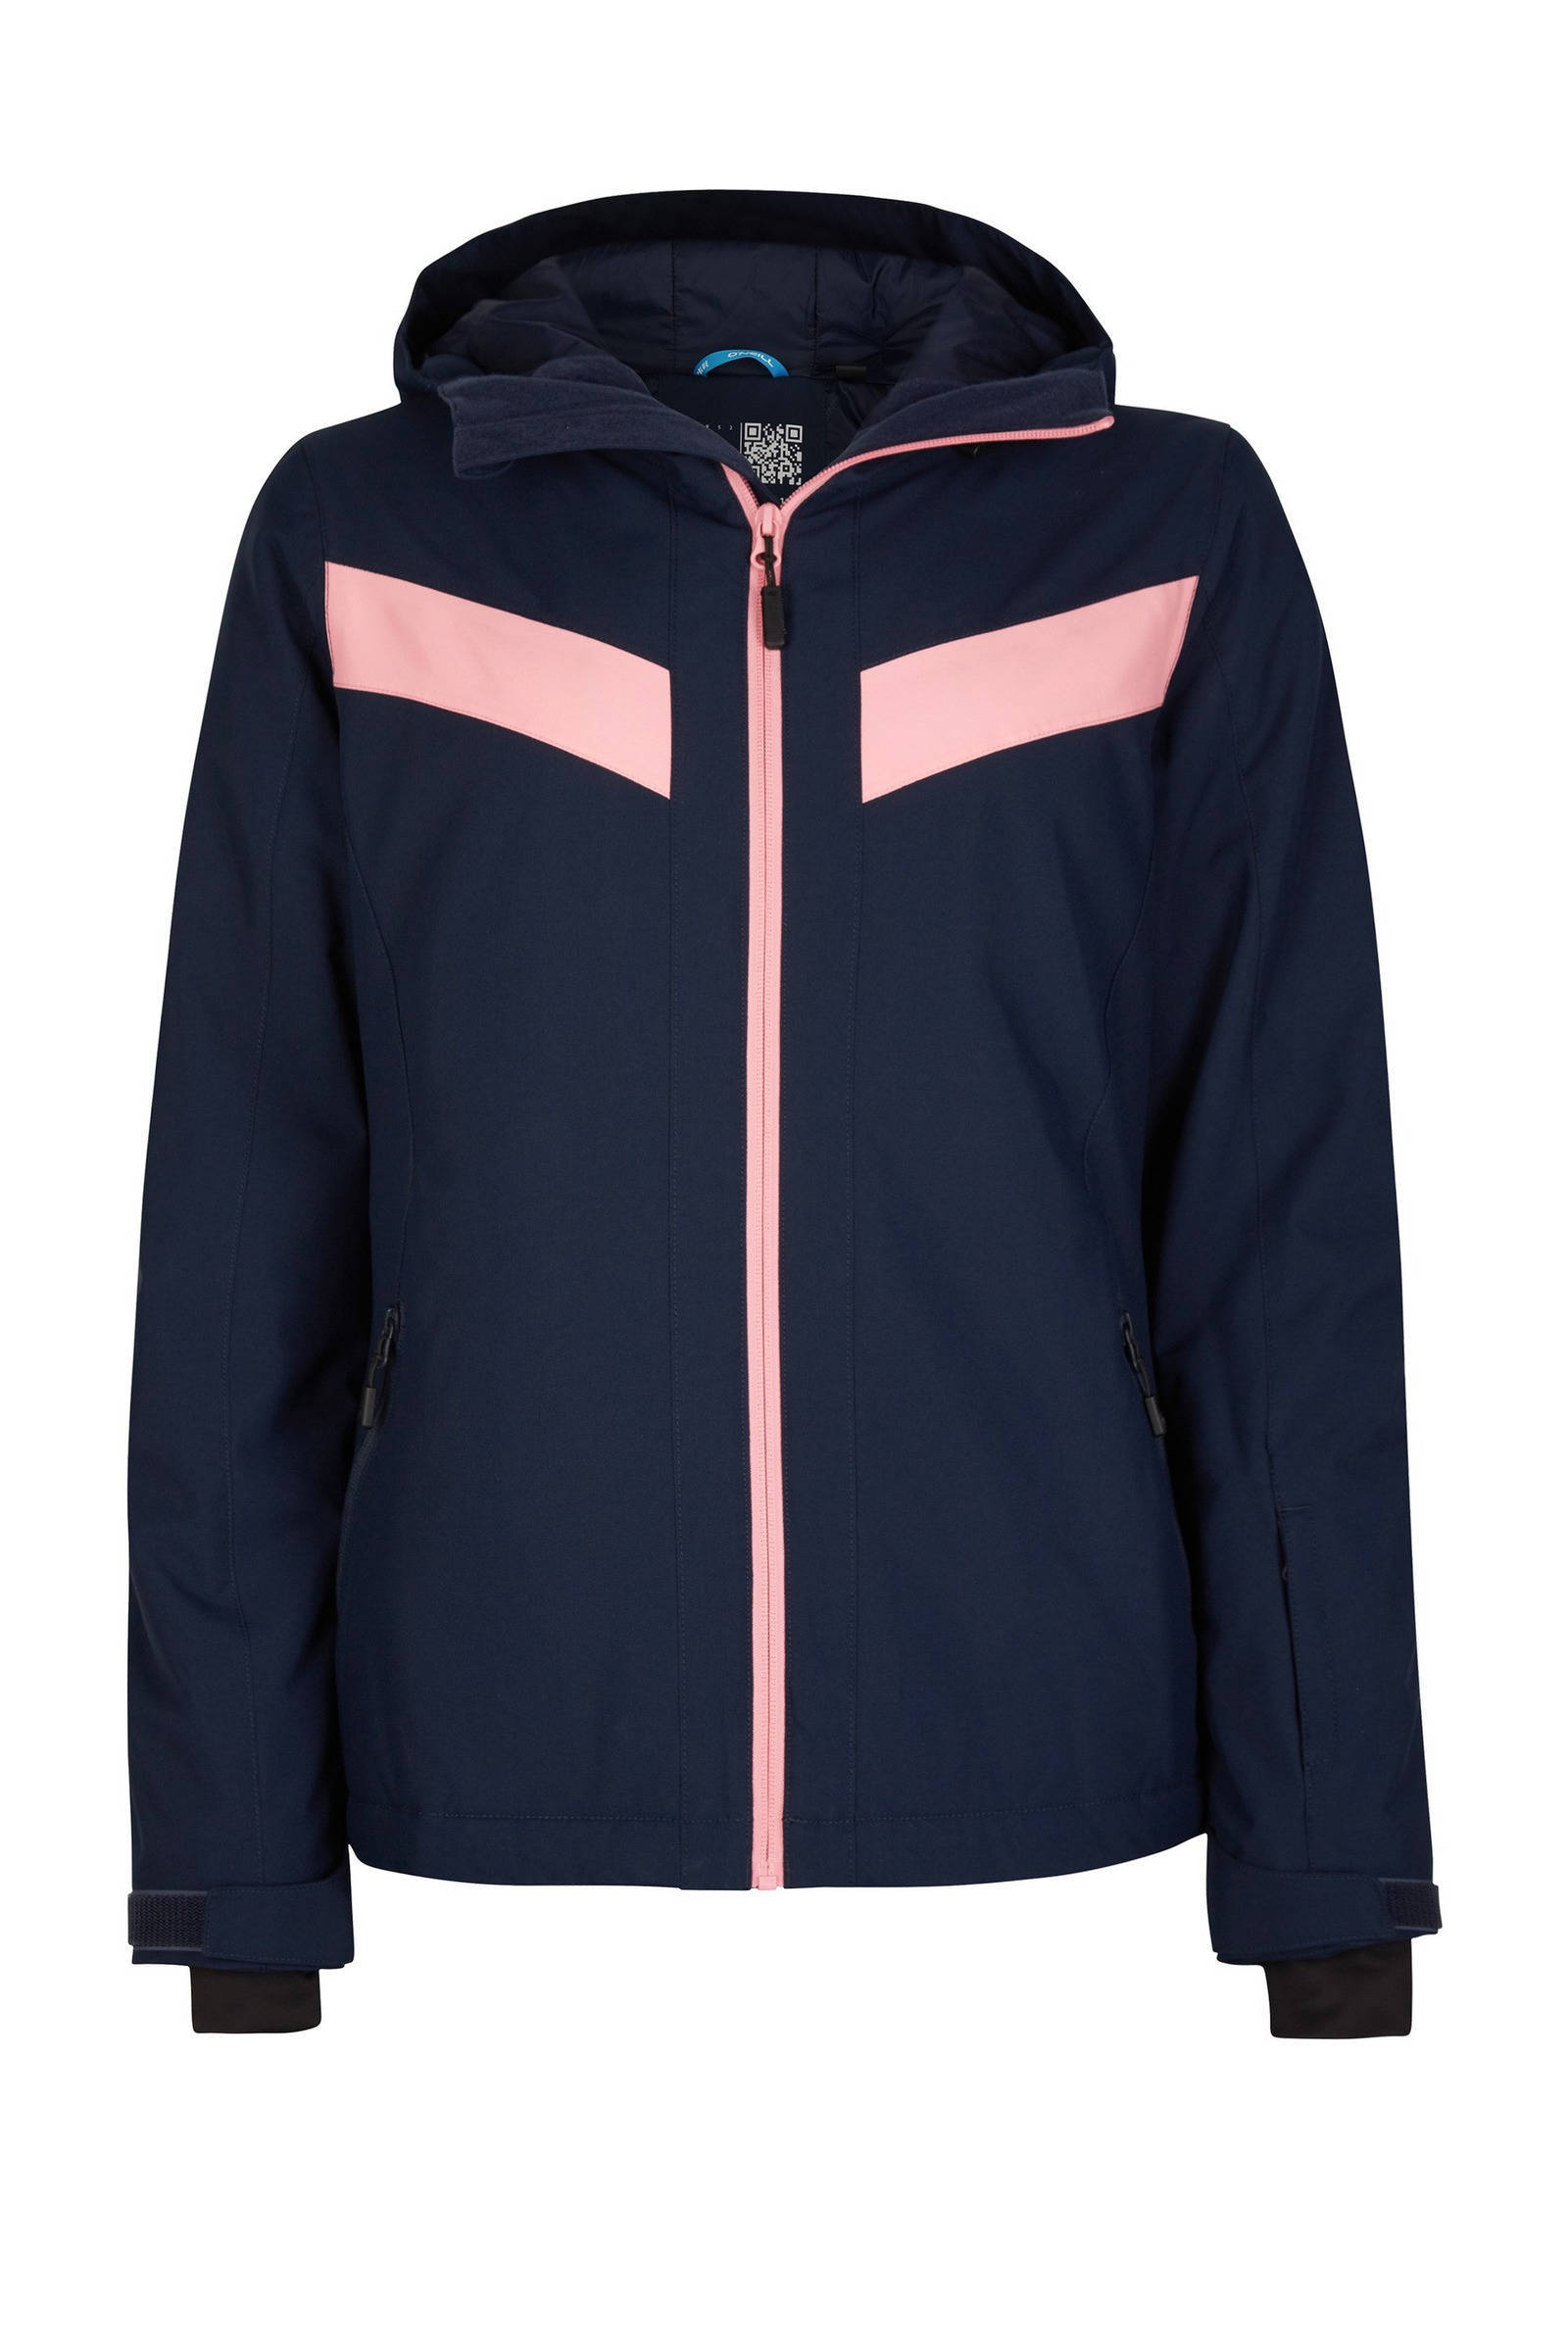 O'Neill ski jack Aplite donkerblauw/roze online kopen